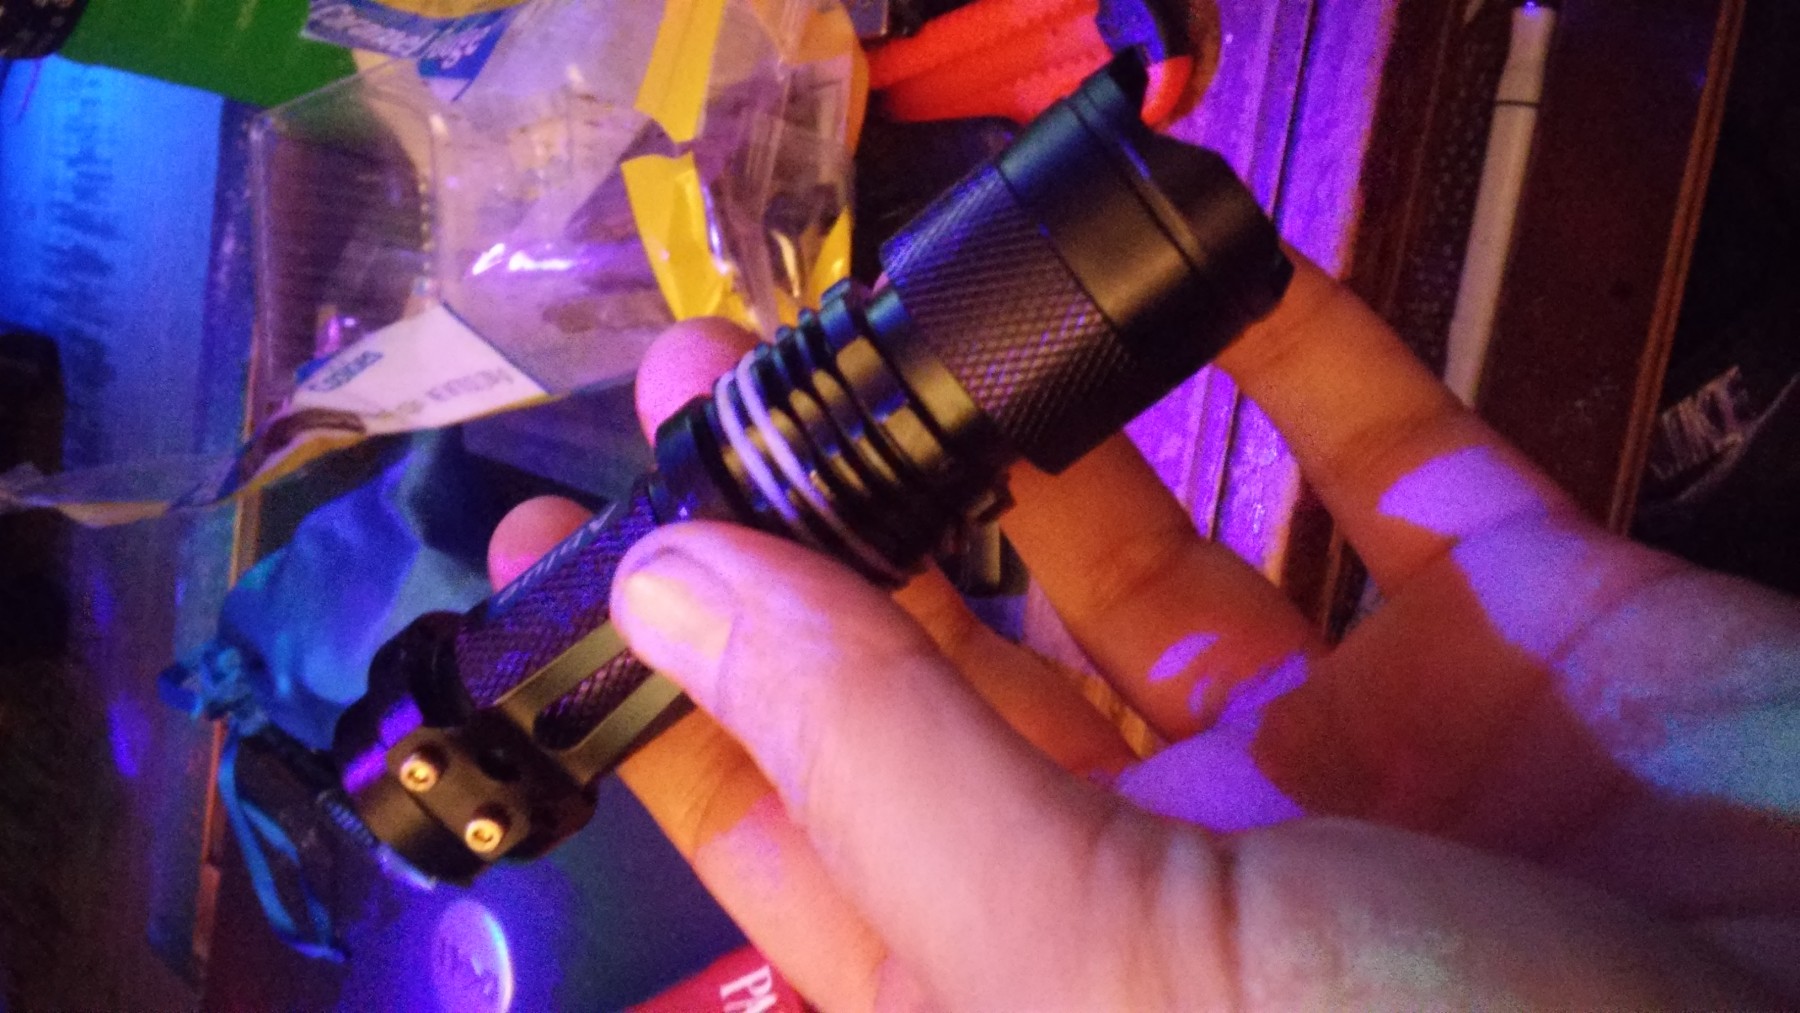 Ablue led flashlight